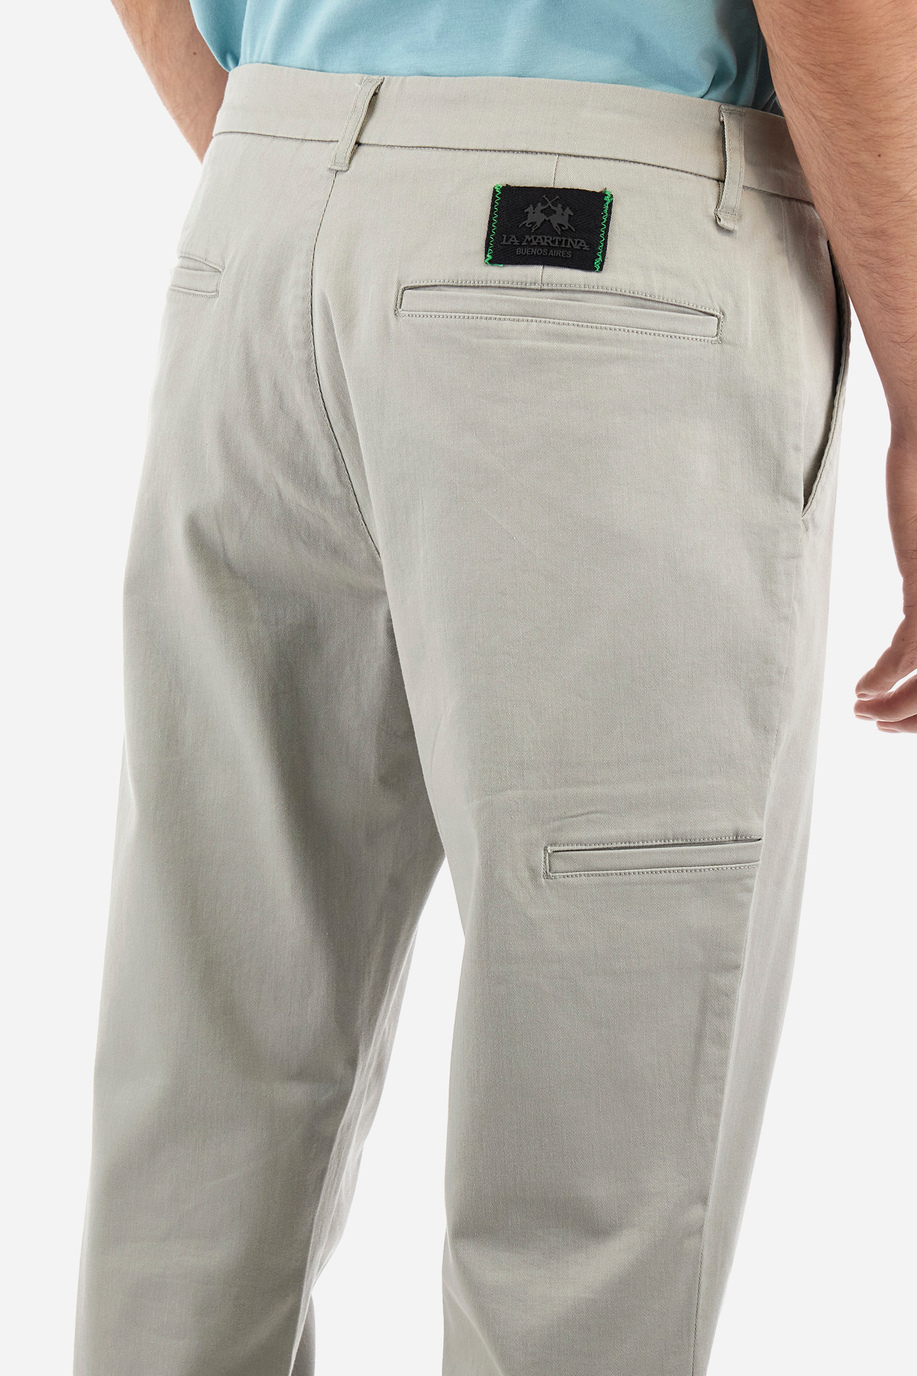 Pantalon chino homme coupe classique - Yirmeyahu - Trousers | La Martina - Official Online Shop